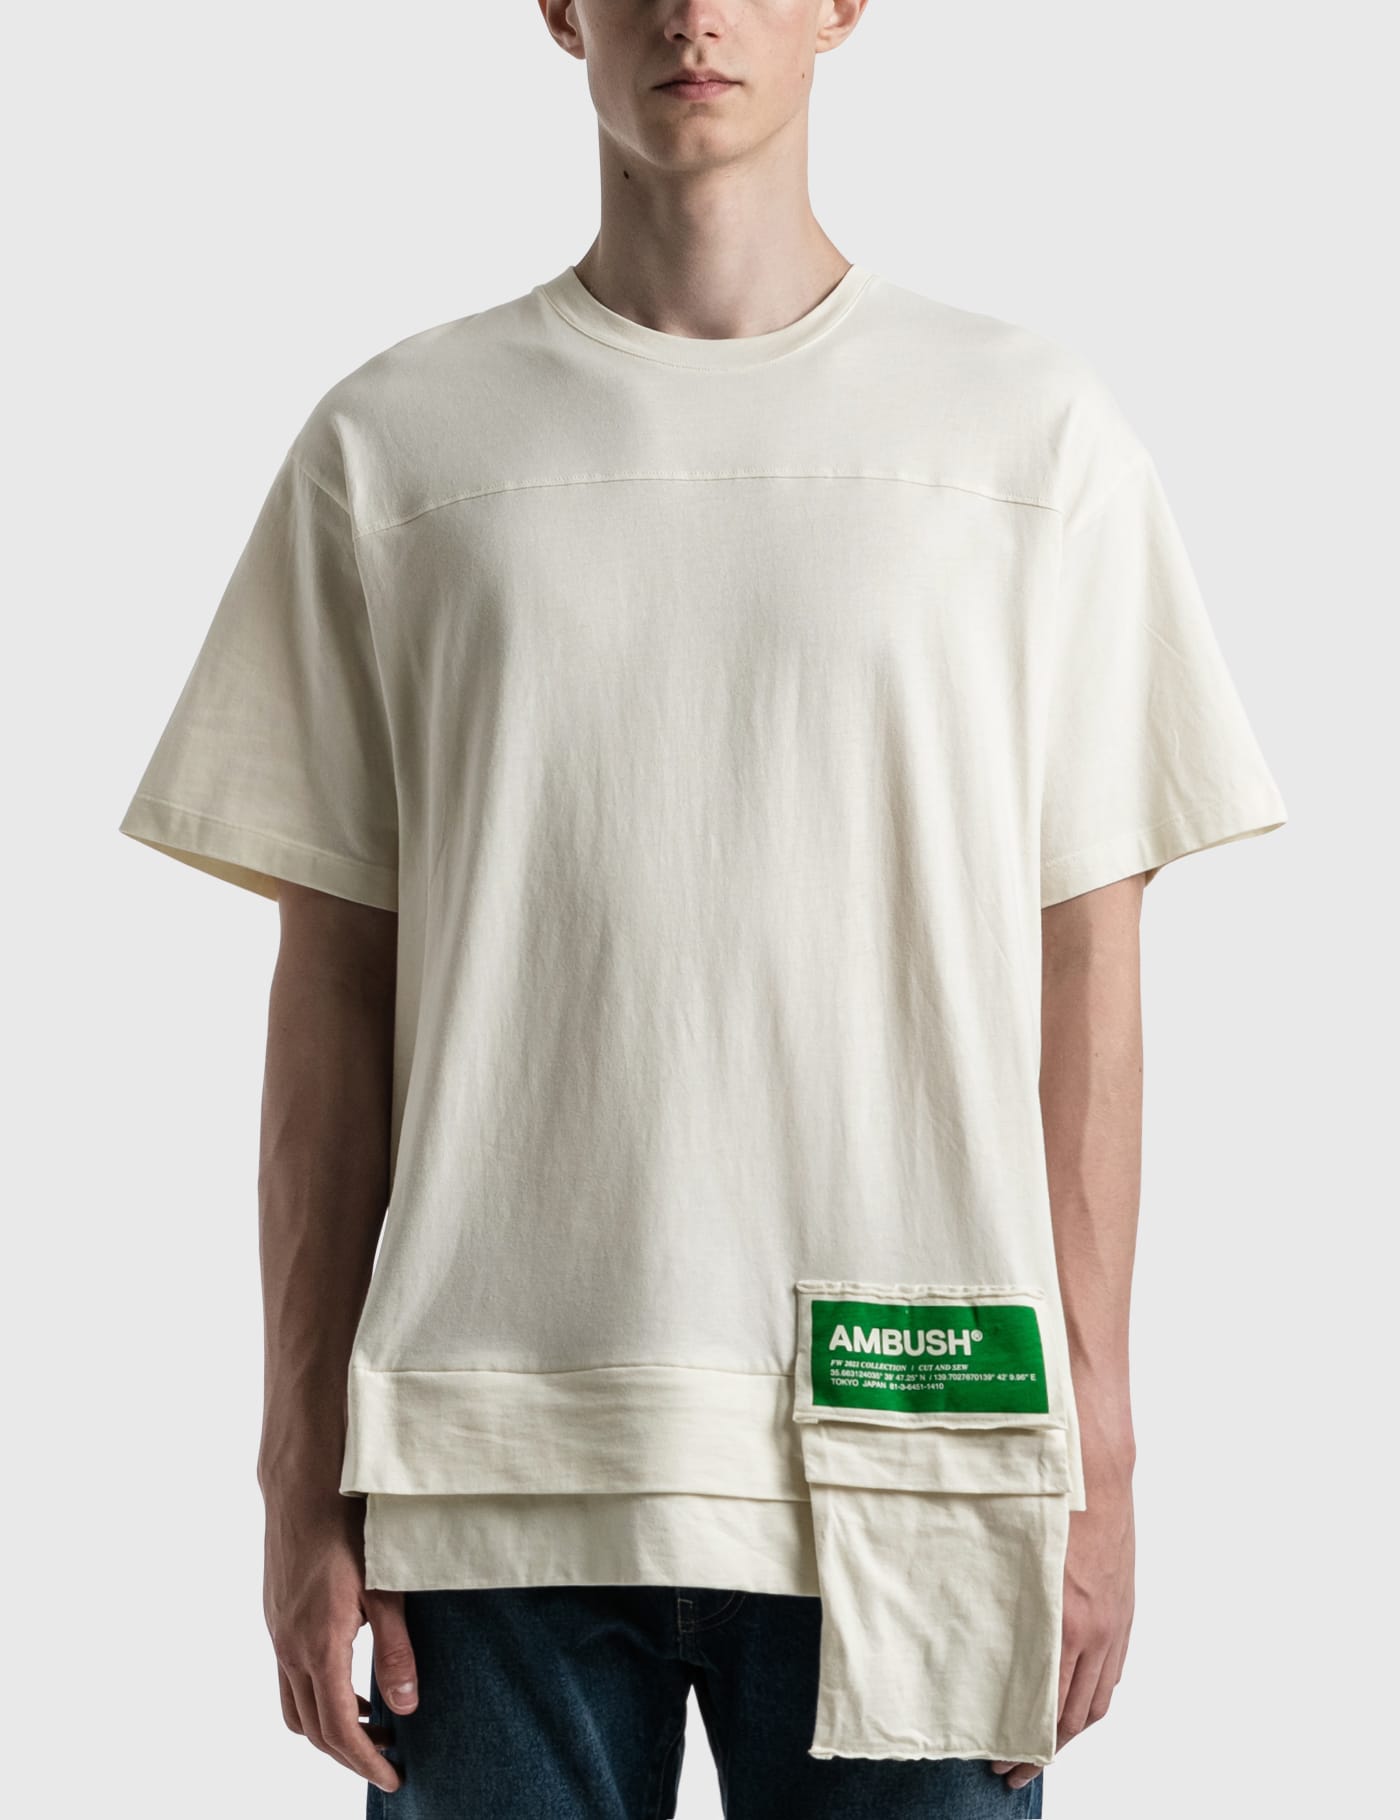 Ambush - Chain Collar T-shirt | HBX - Globally Curated Fashion and 